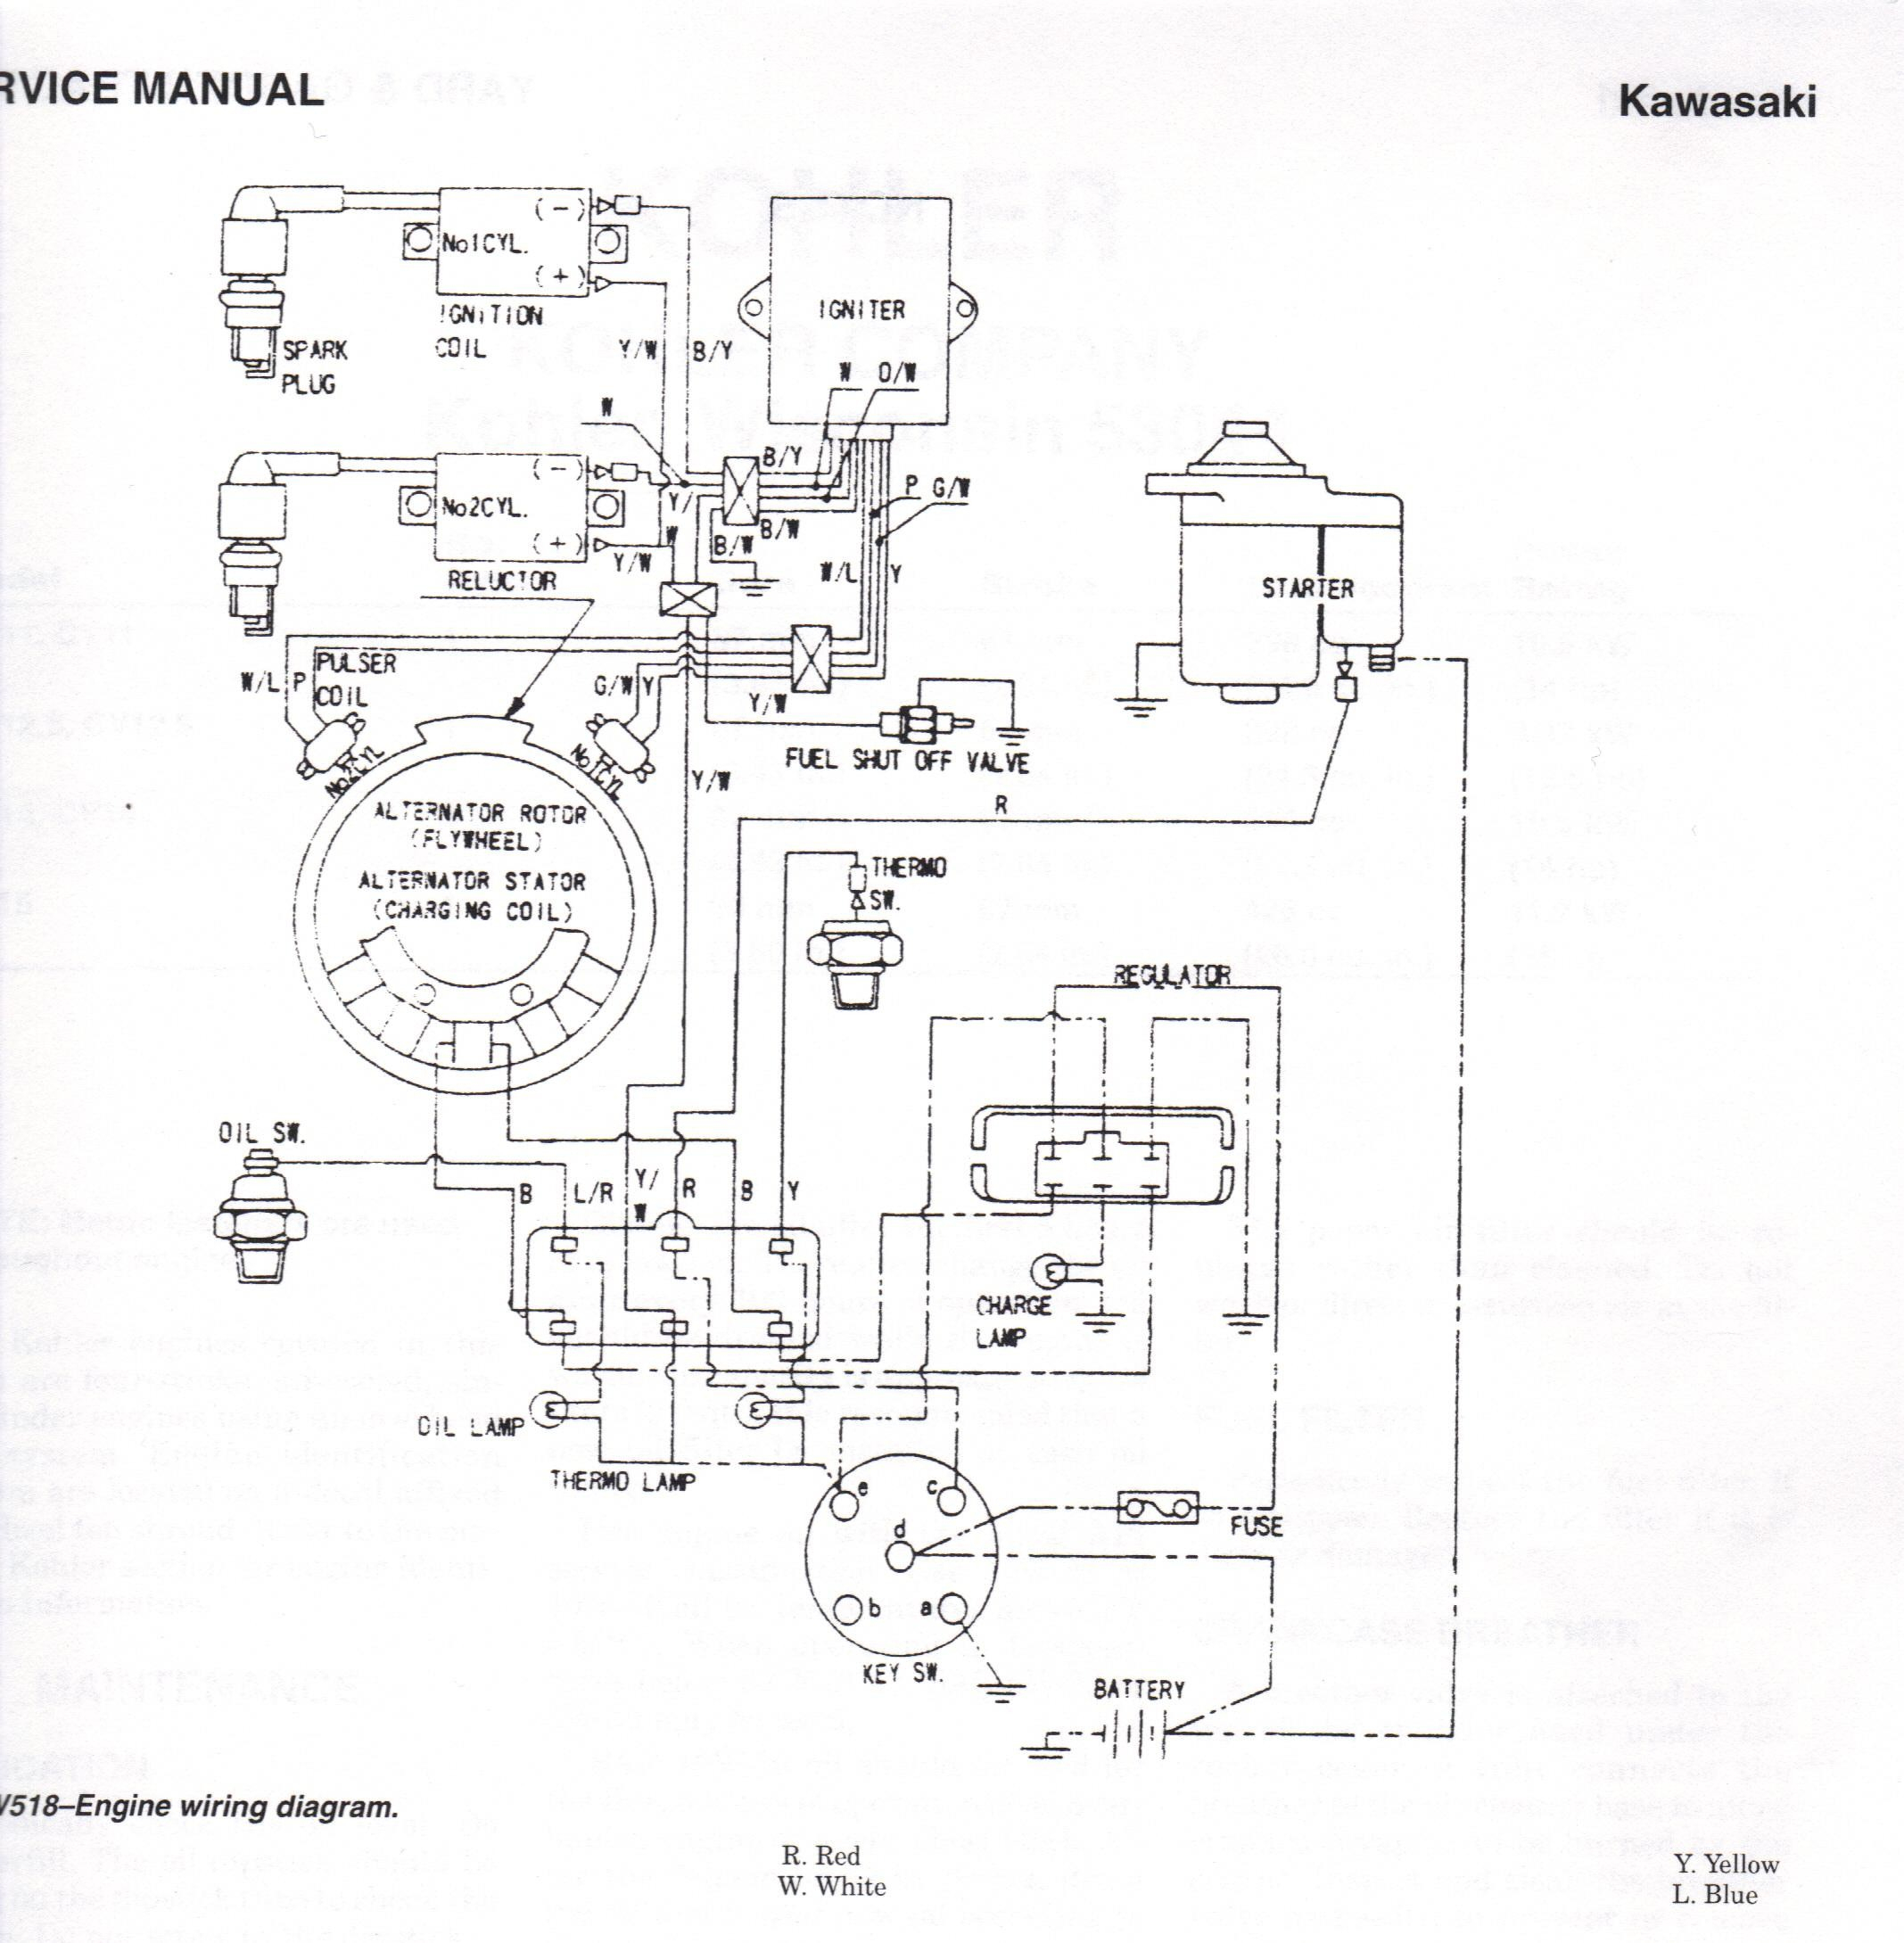 Gm Ignition Switch Wiring Diagram - Wiring Diagram And Schematics - Gm Ignition Switch Wiring Diagram